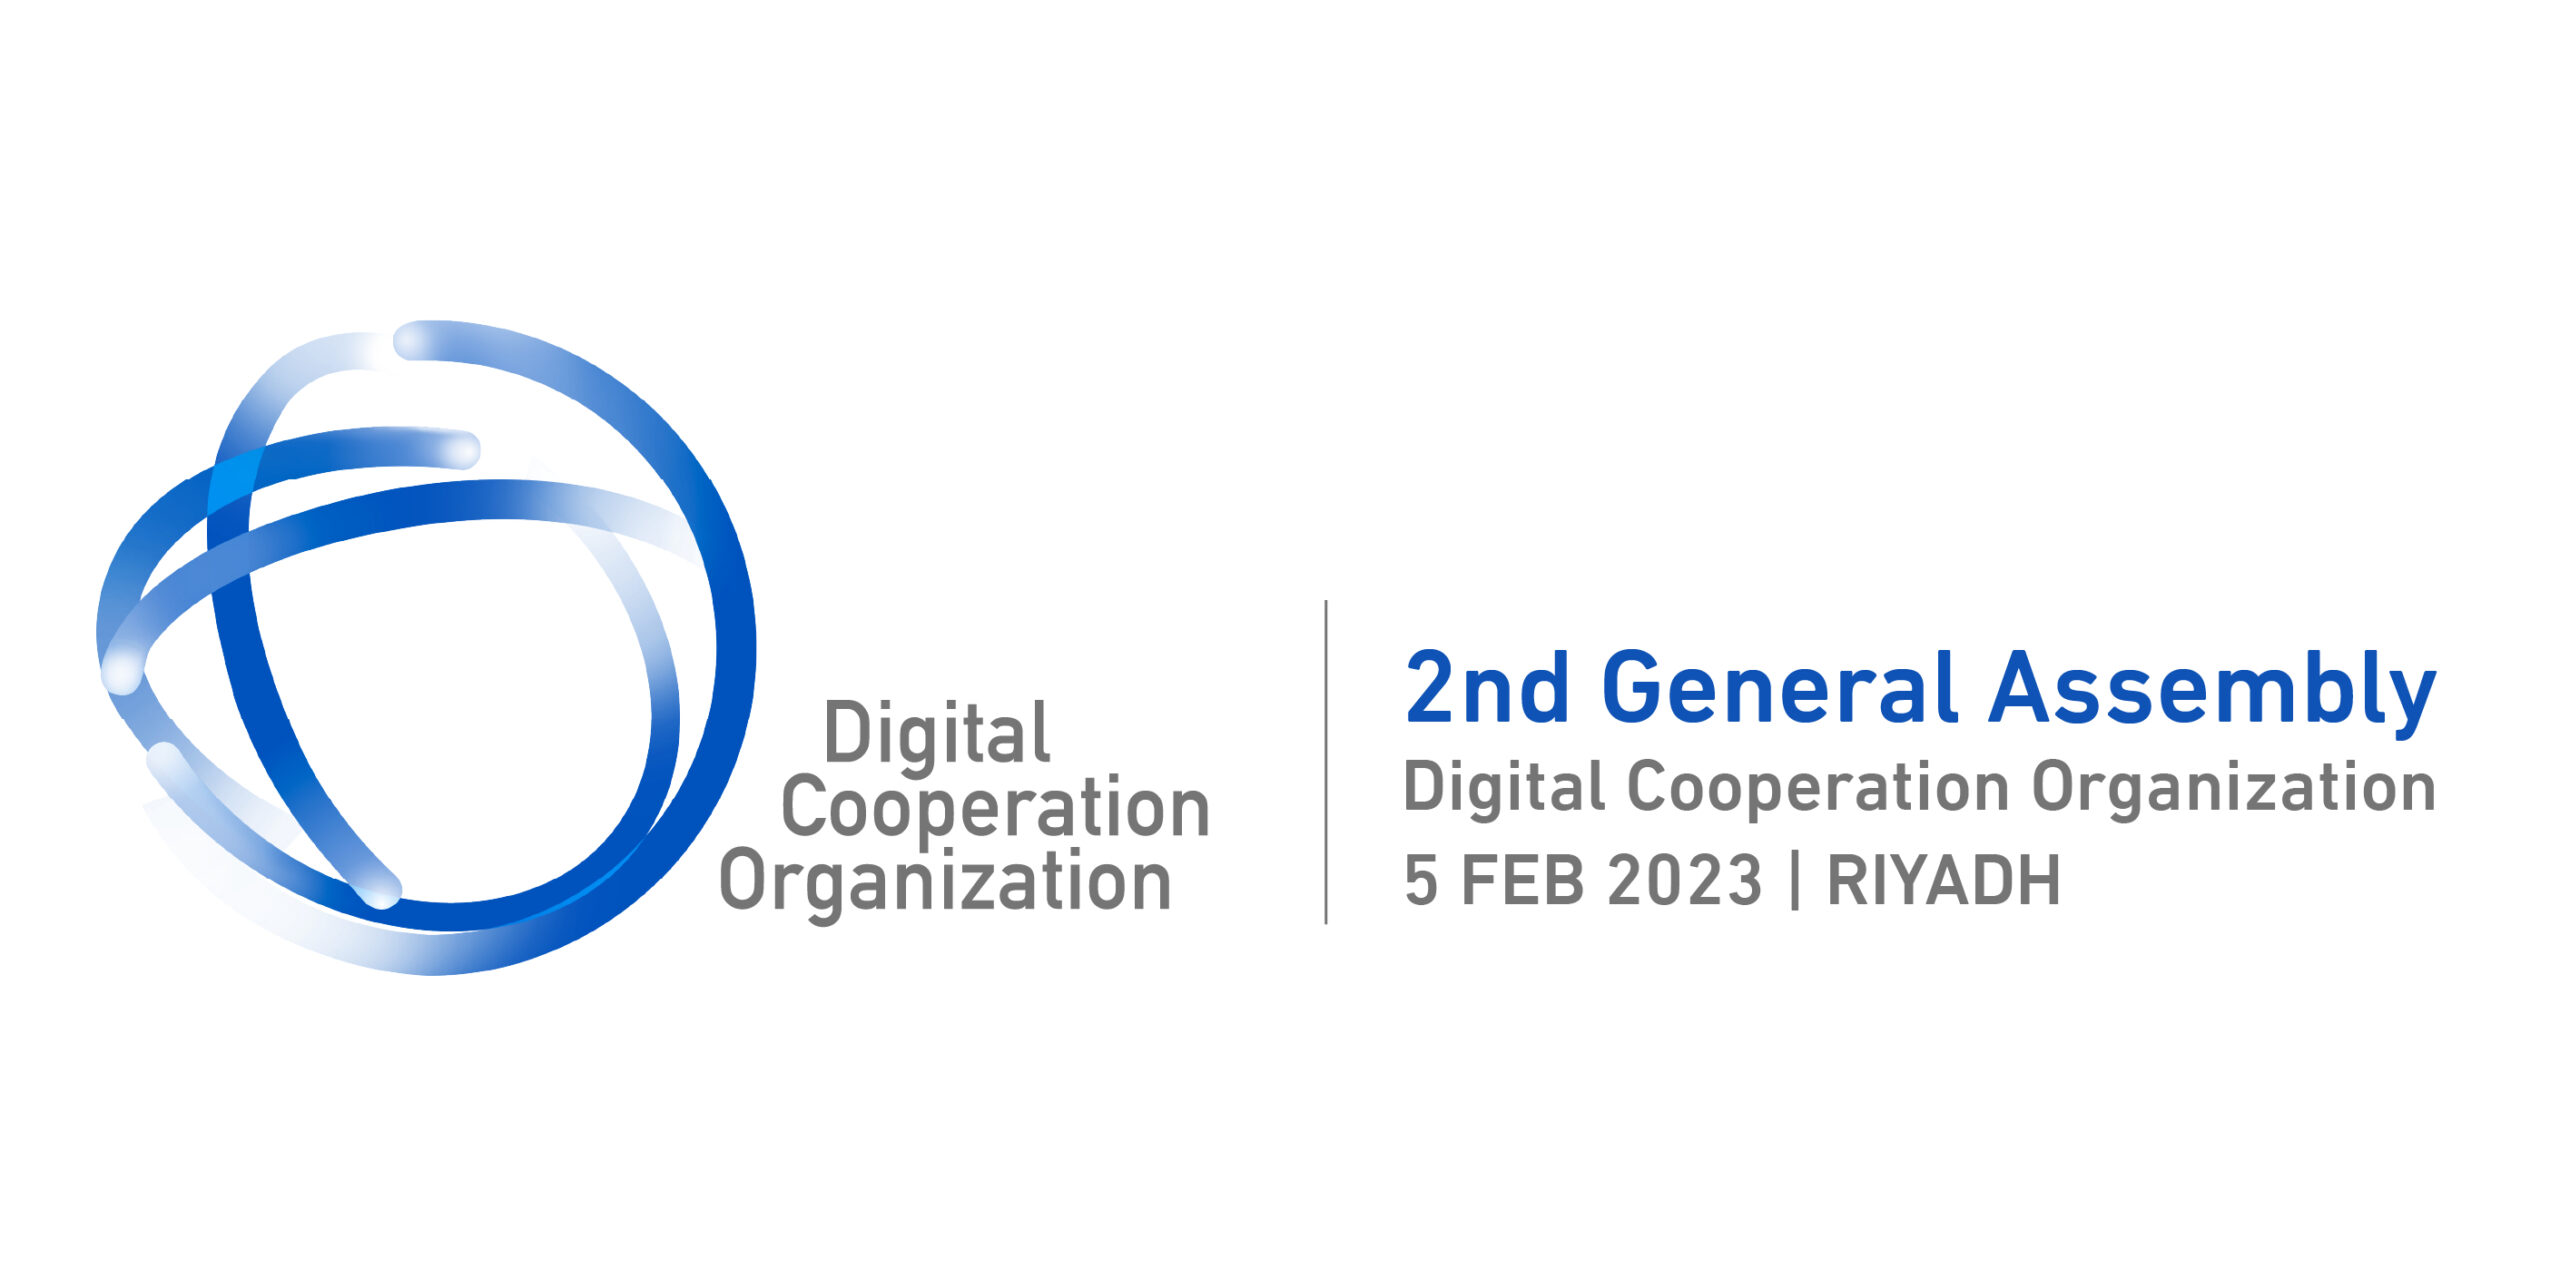 Digital Cooperation Organization